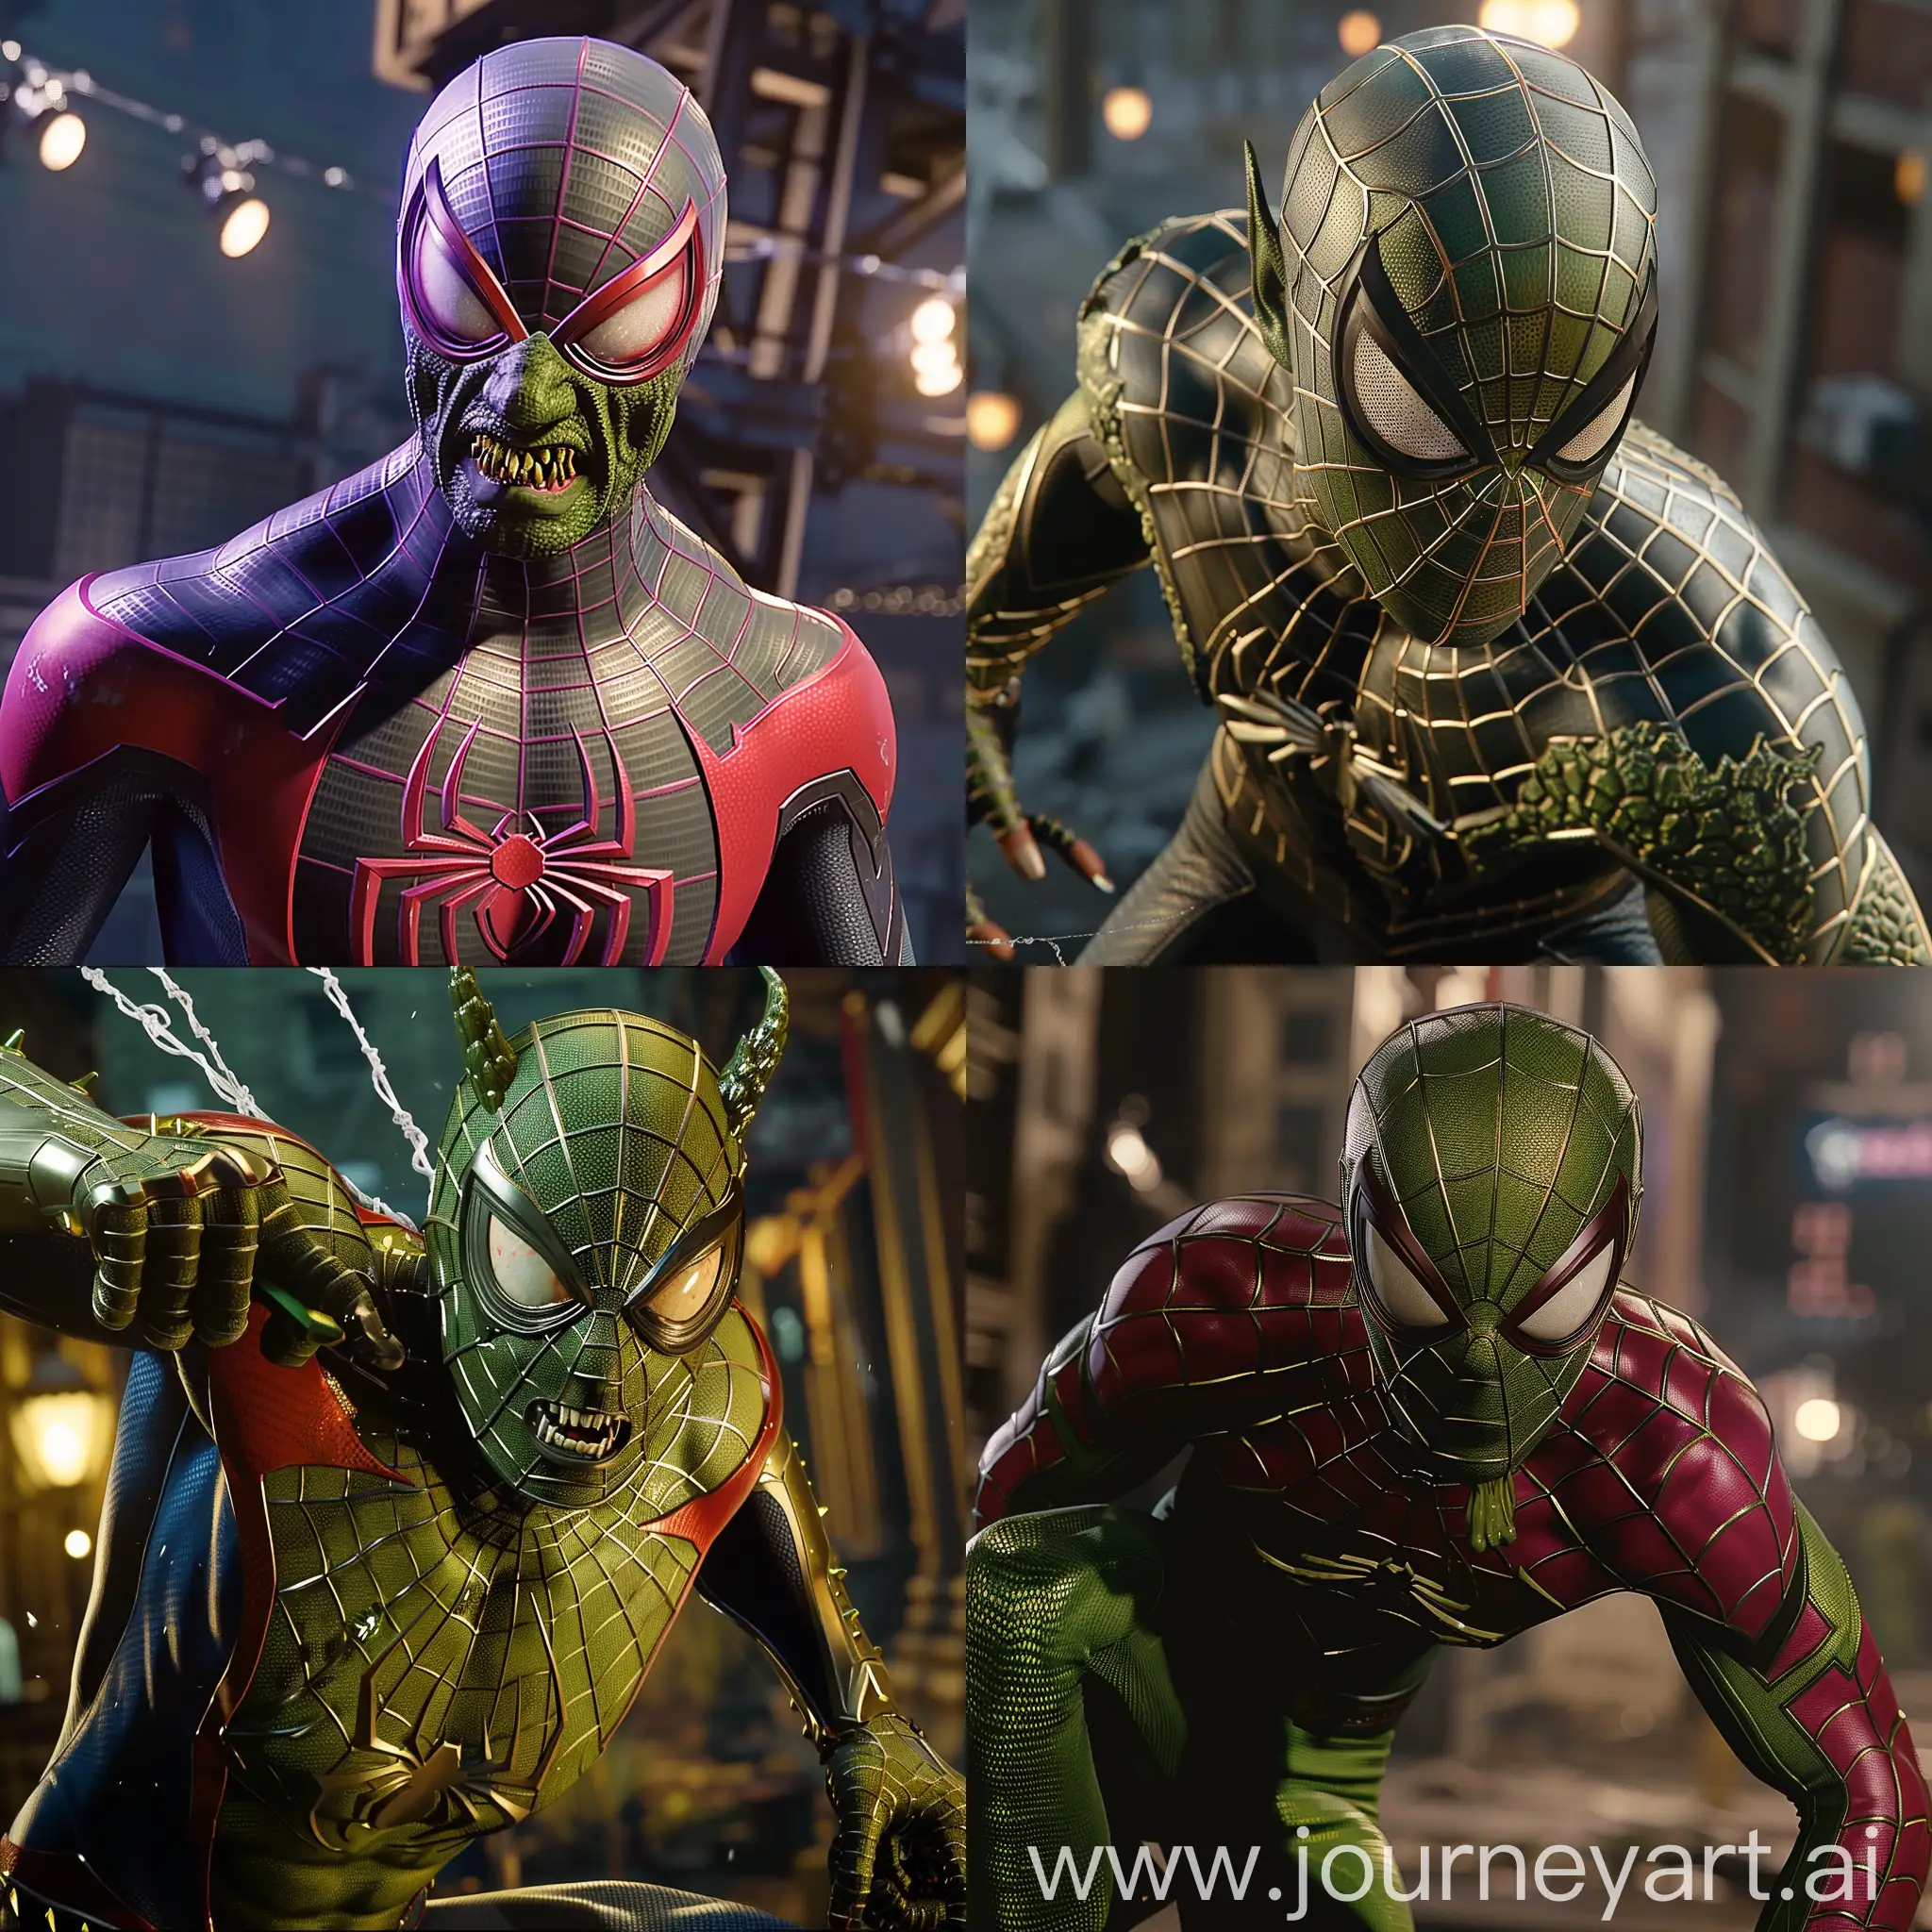 /imagine spiderman 3 ps5 game make green goblin character